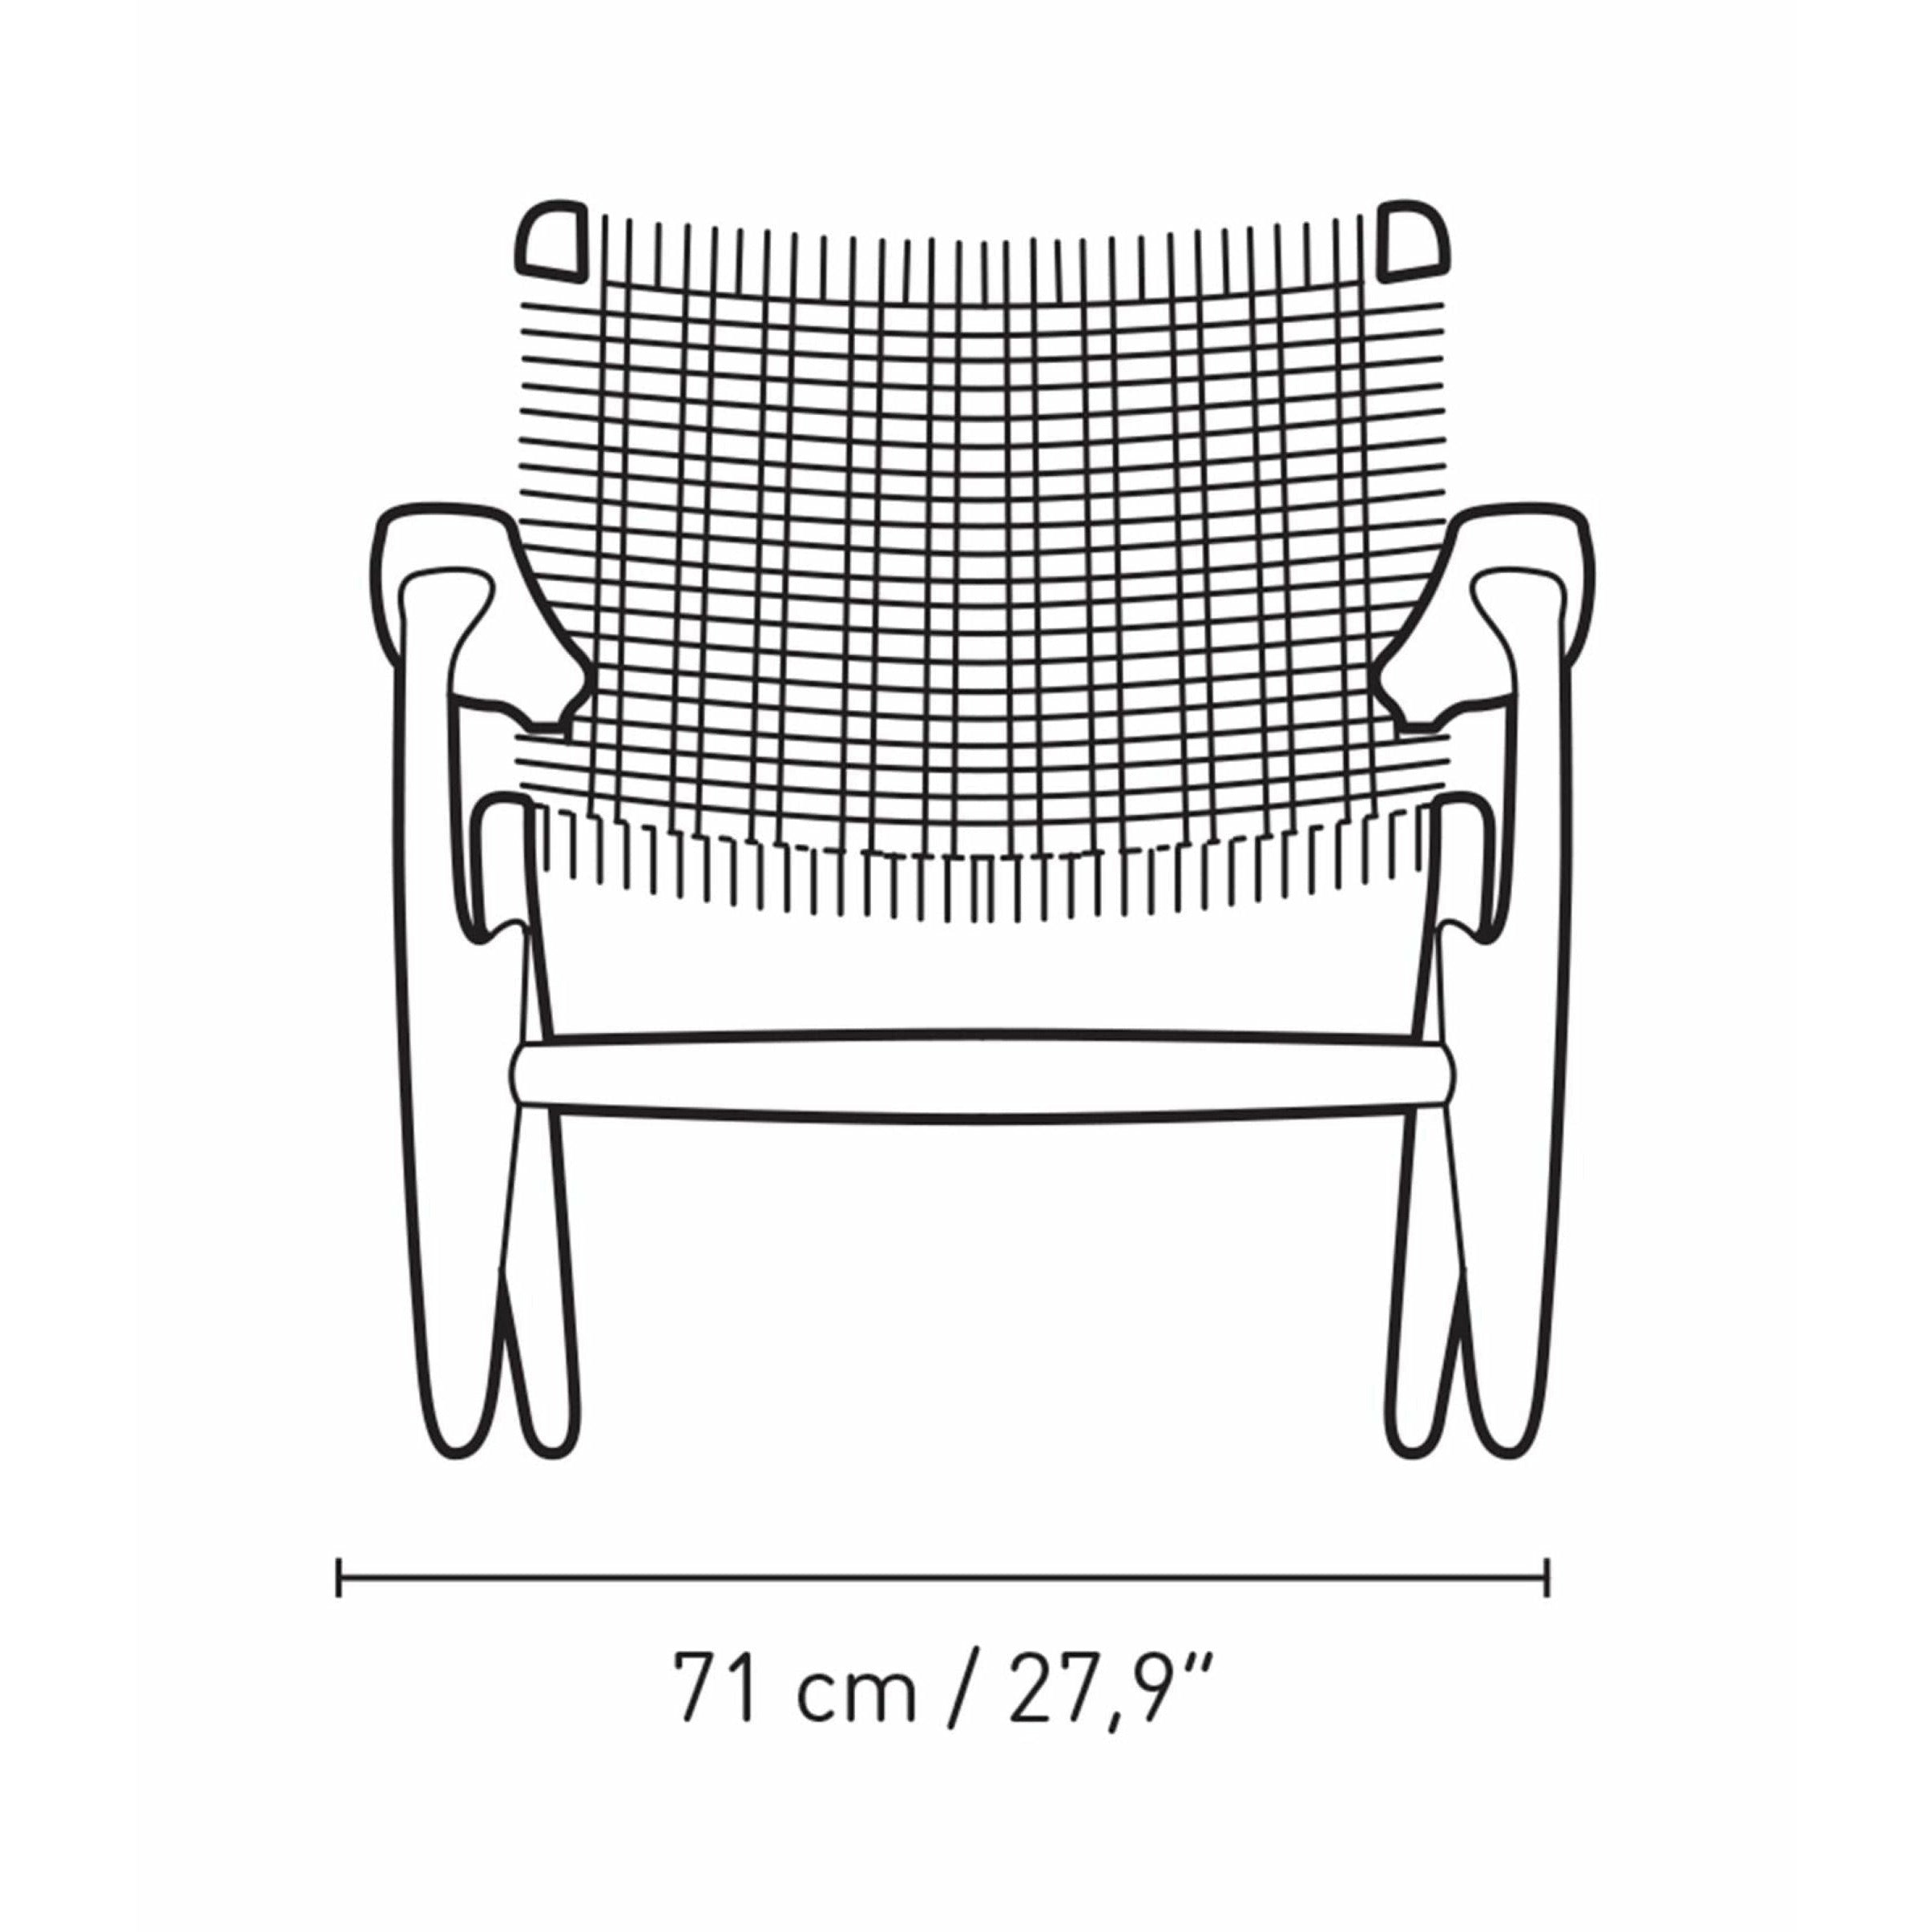 Carl Hansen CH25 Lounge Chair Oak, Falu Red/Nature Braid - Special Edition